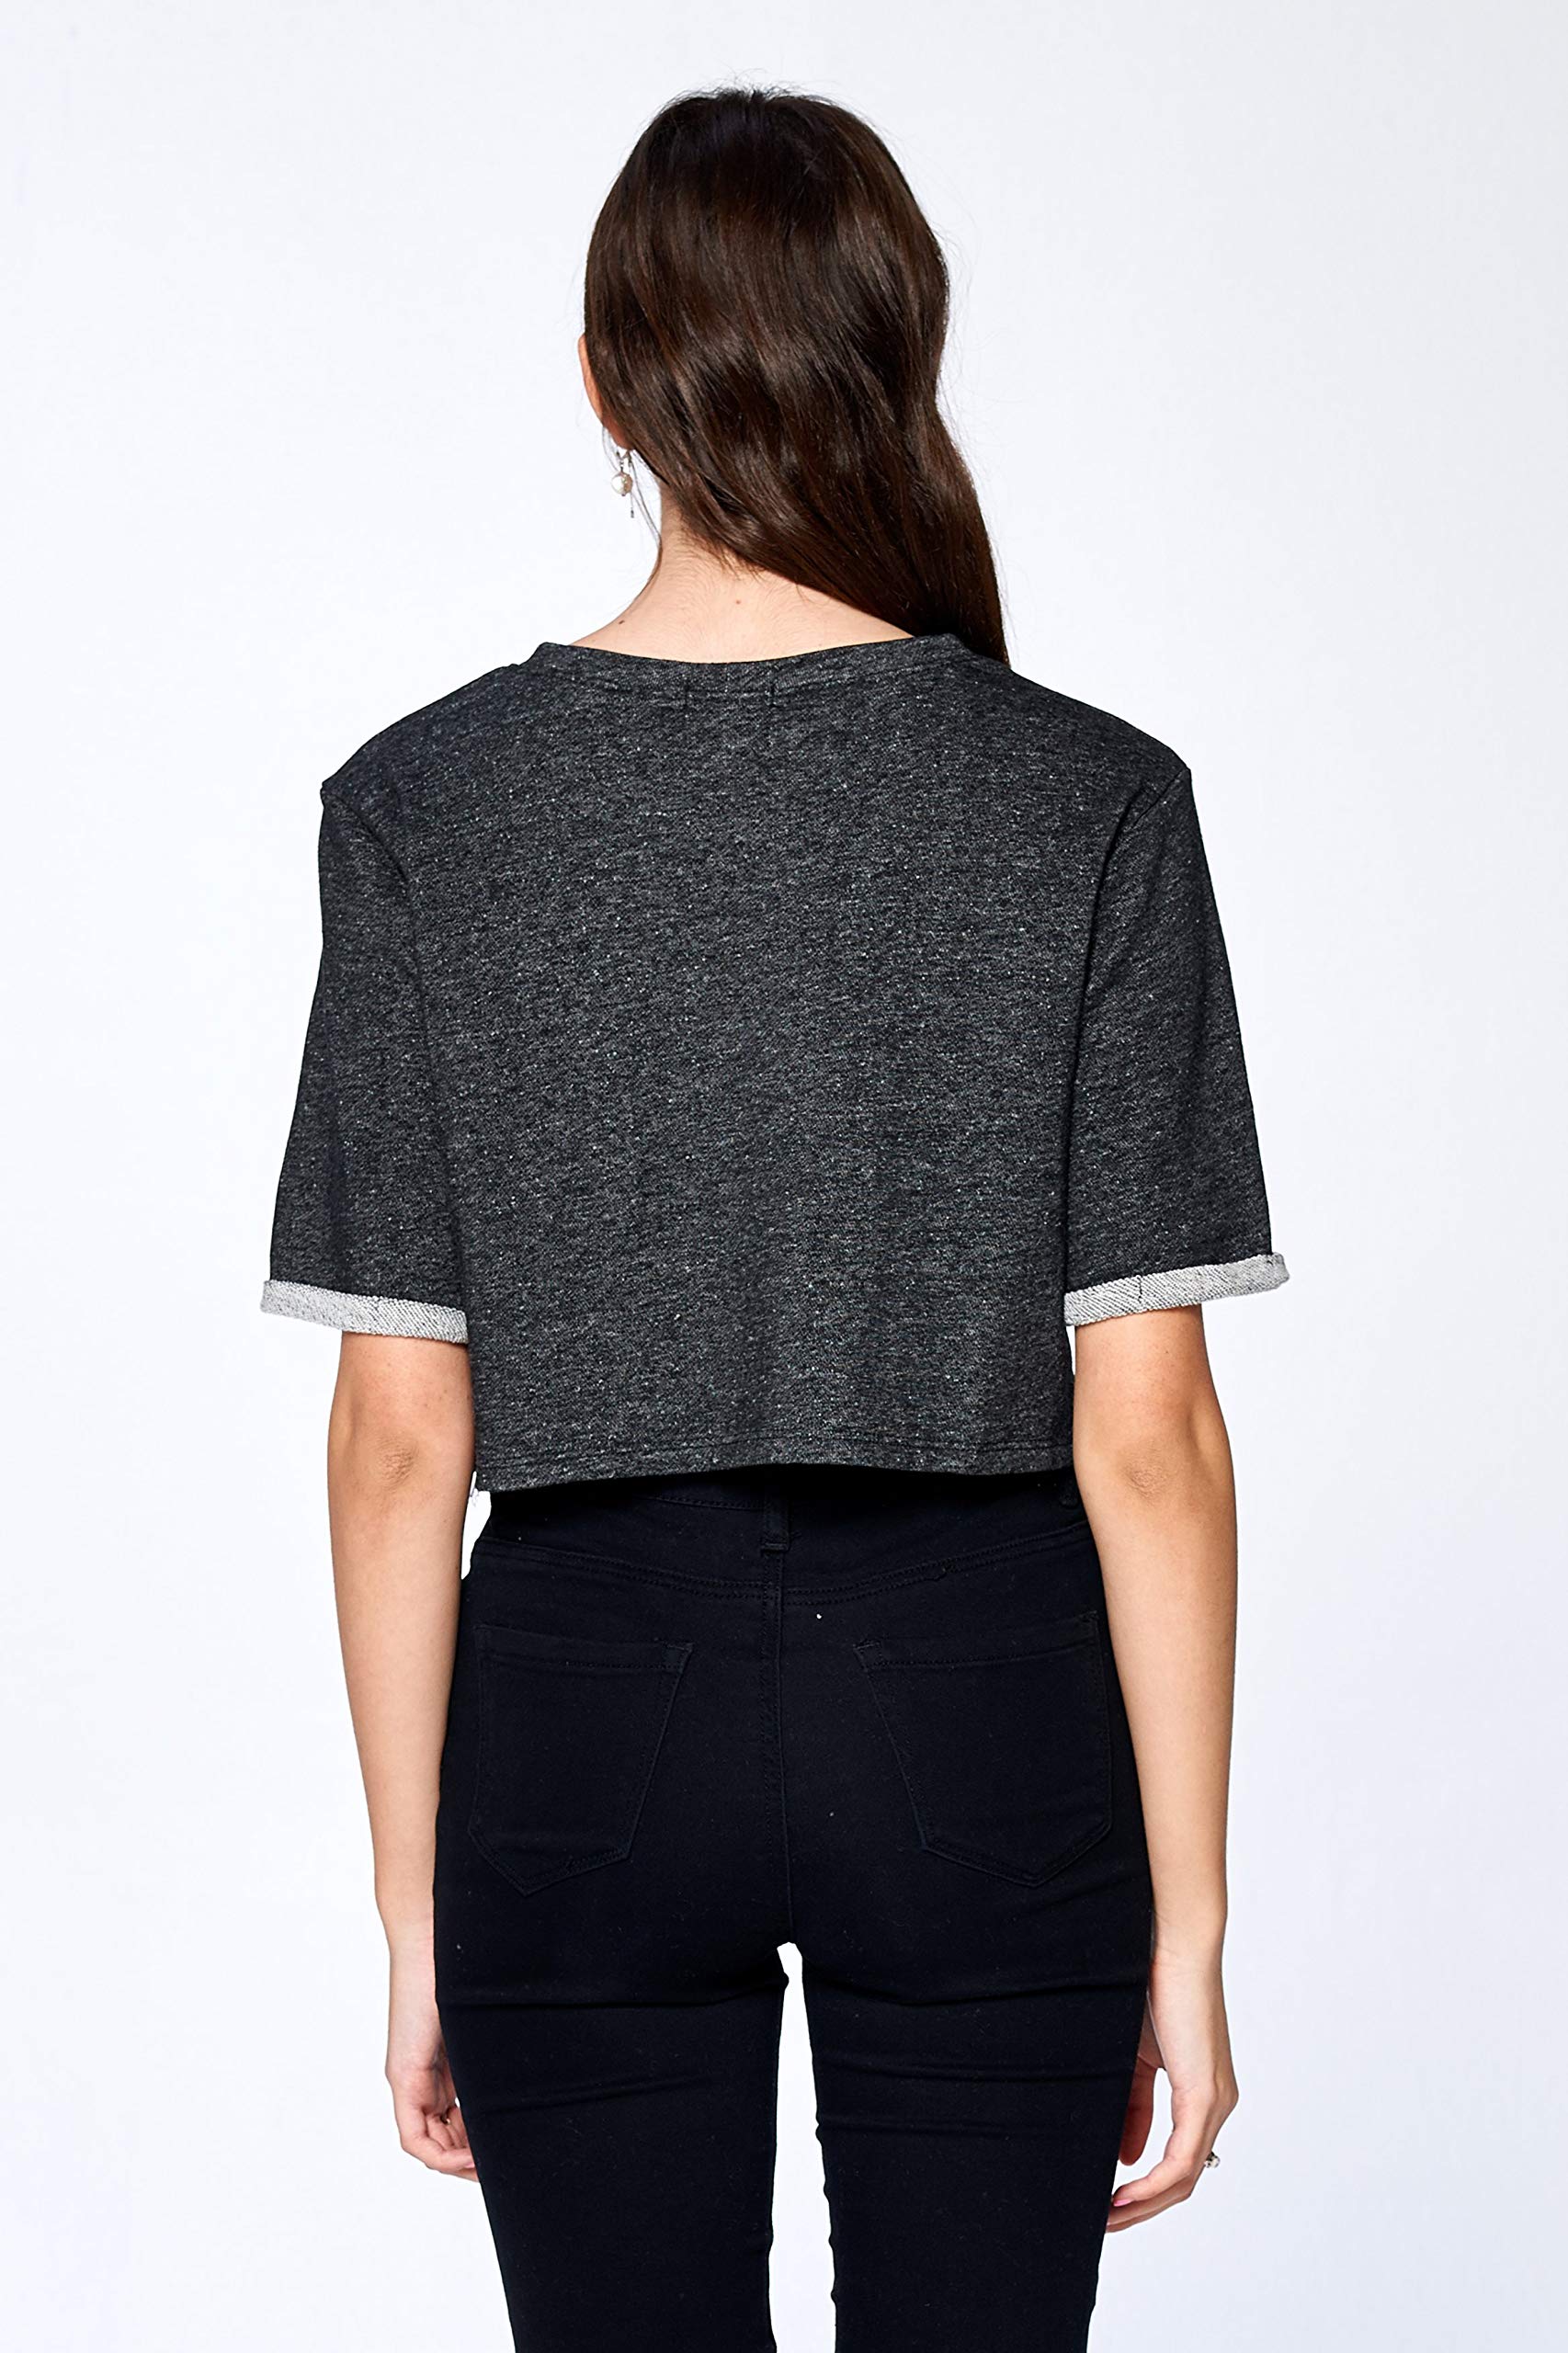 Khanomak Women's Short Sleeve Crewneck Front Pocket Sweater Top